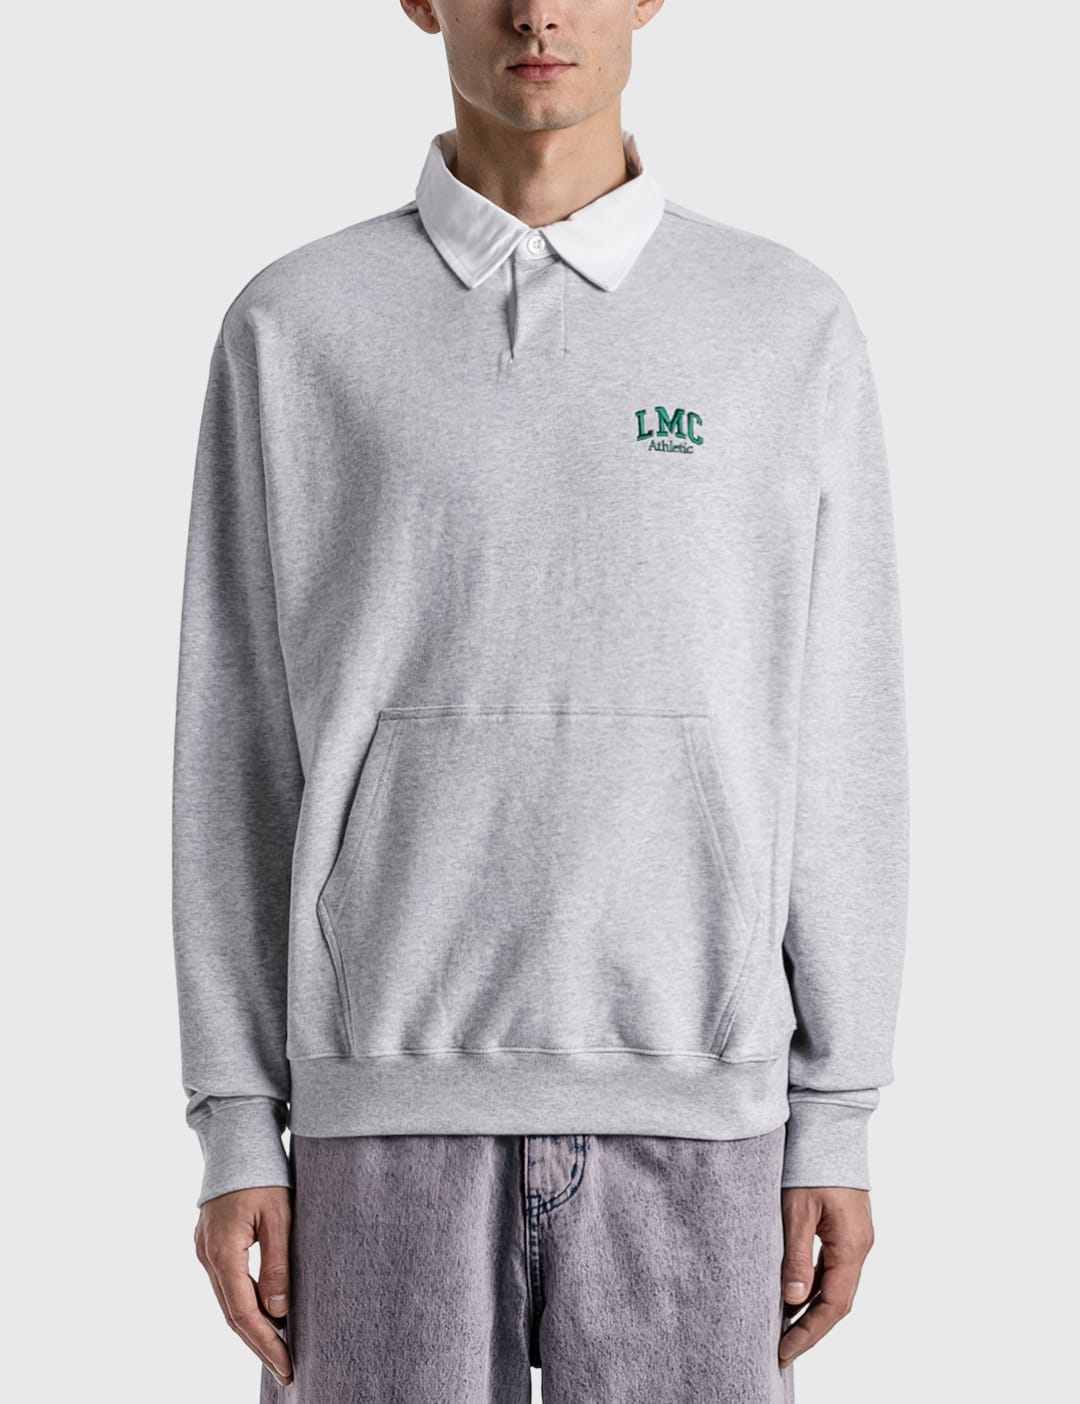 LMC - Athletic Rugby Sweatshirt | HBX - Globally Curated Fashion